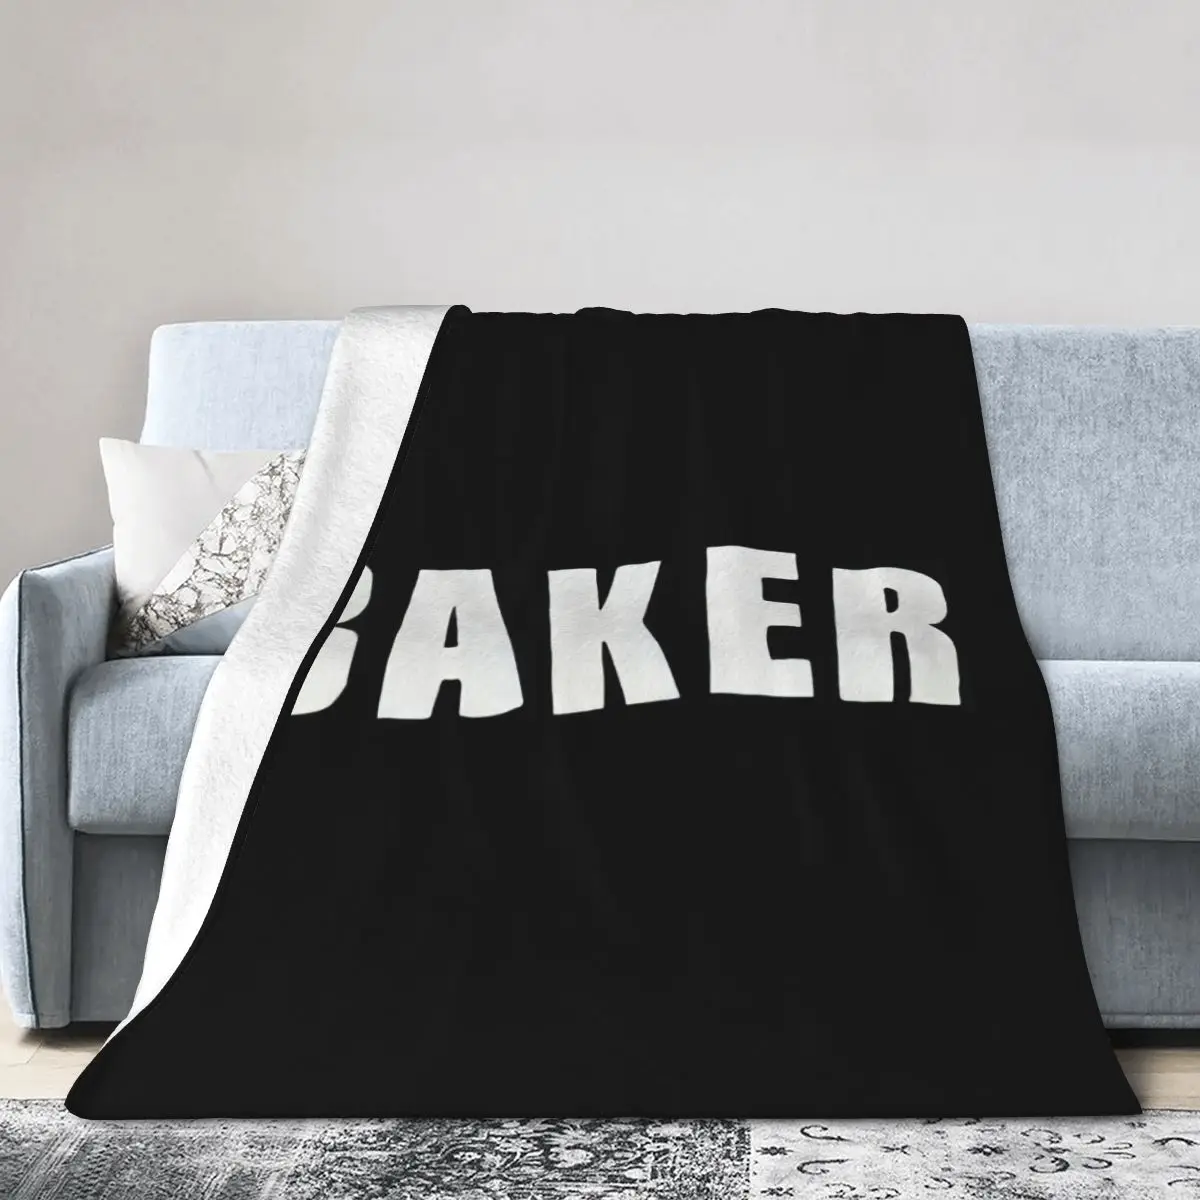 

Baker Skateboard Swea Brand Logo Comforter Travel Blanket Bed Throw Microfibers Anti-pilling Non-stick Dirty resistant washable